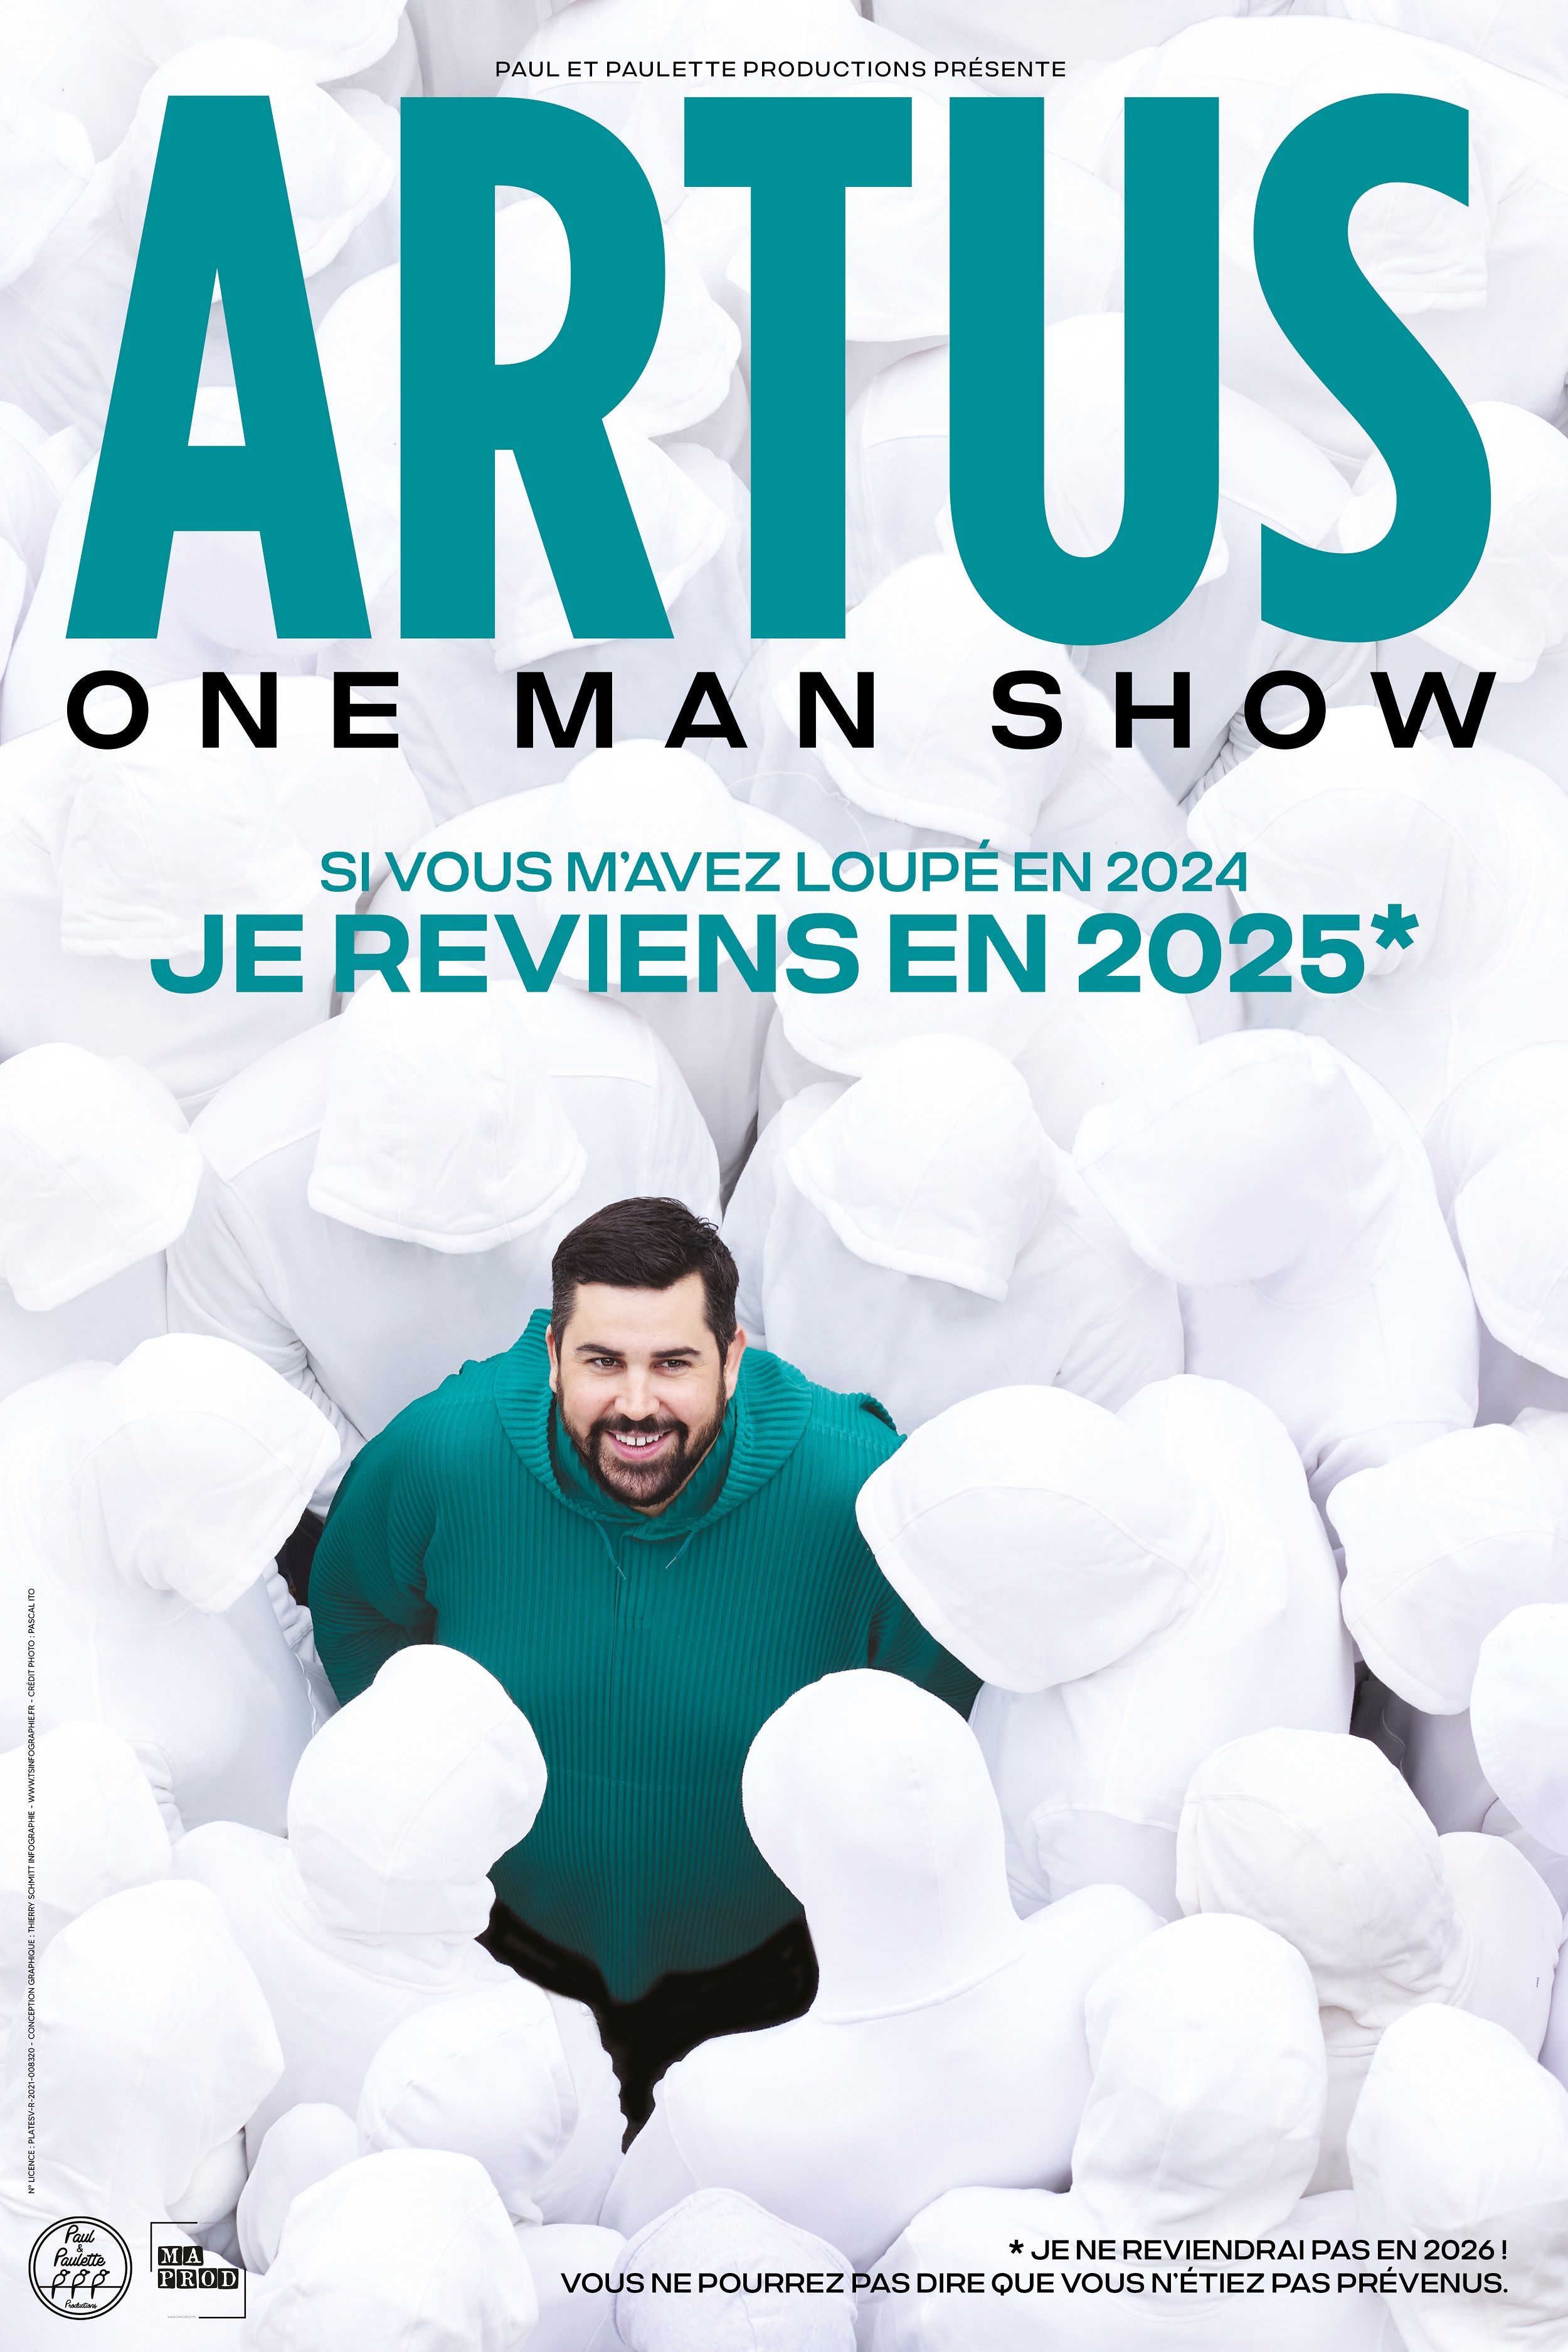 One man show : Artus